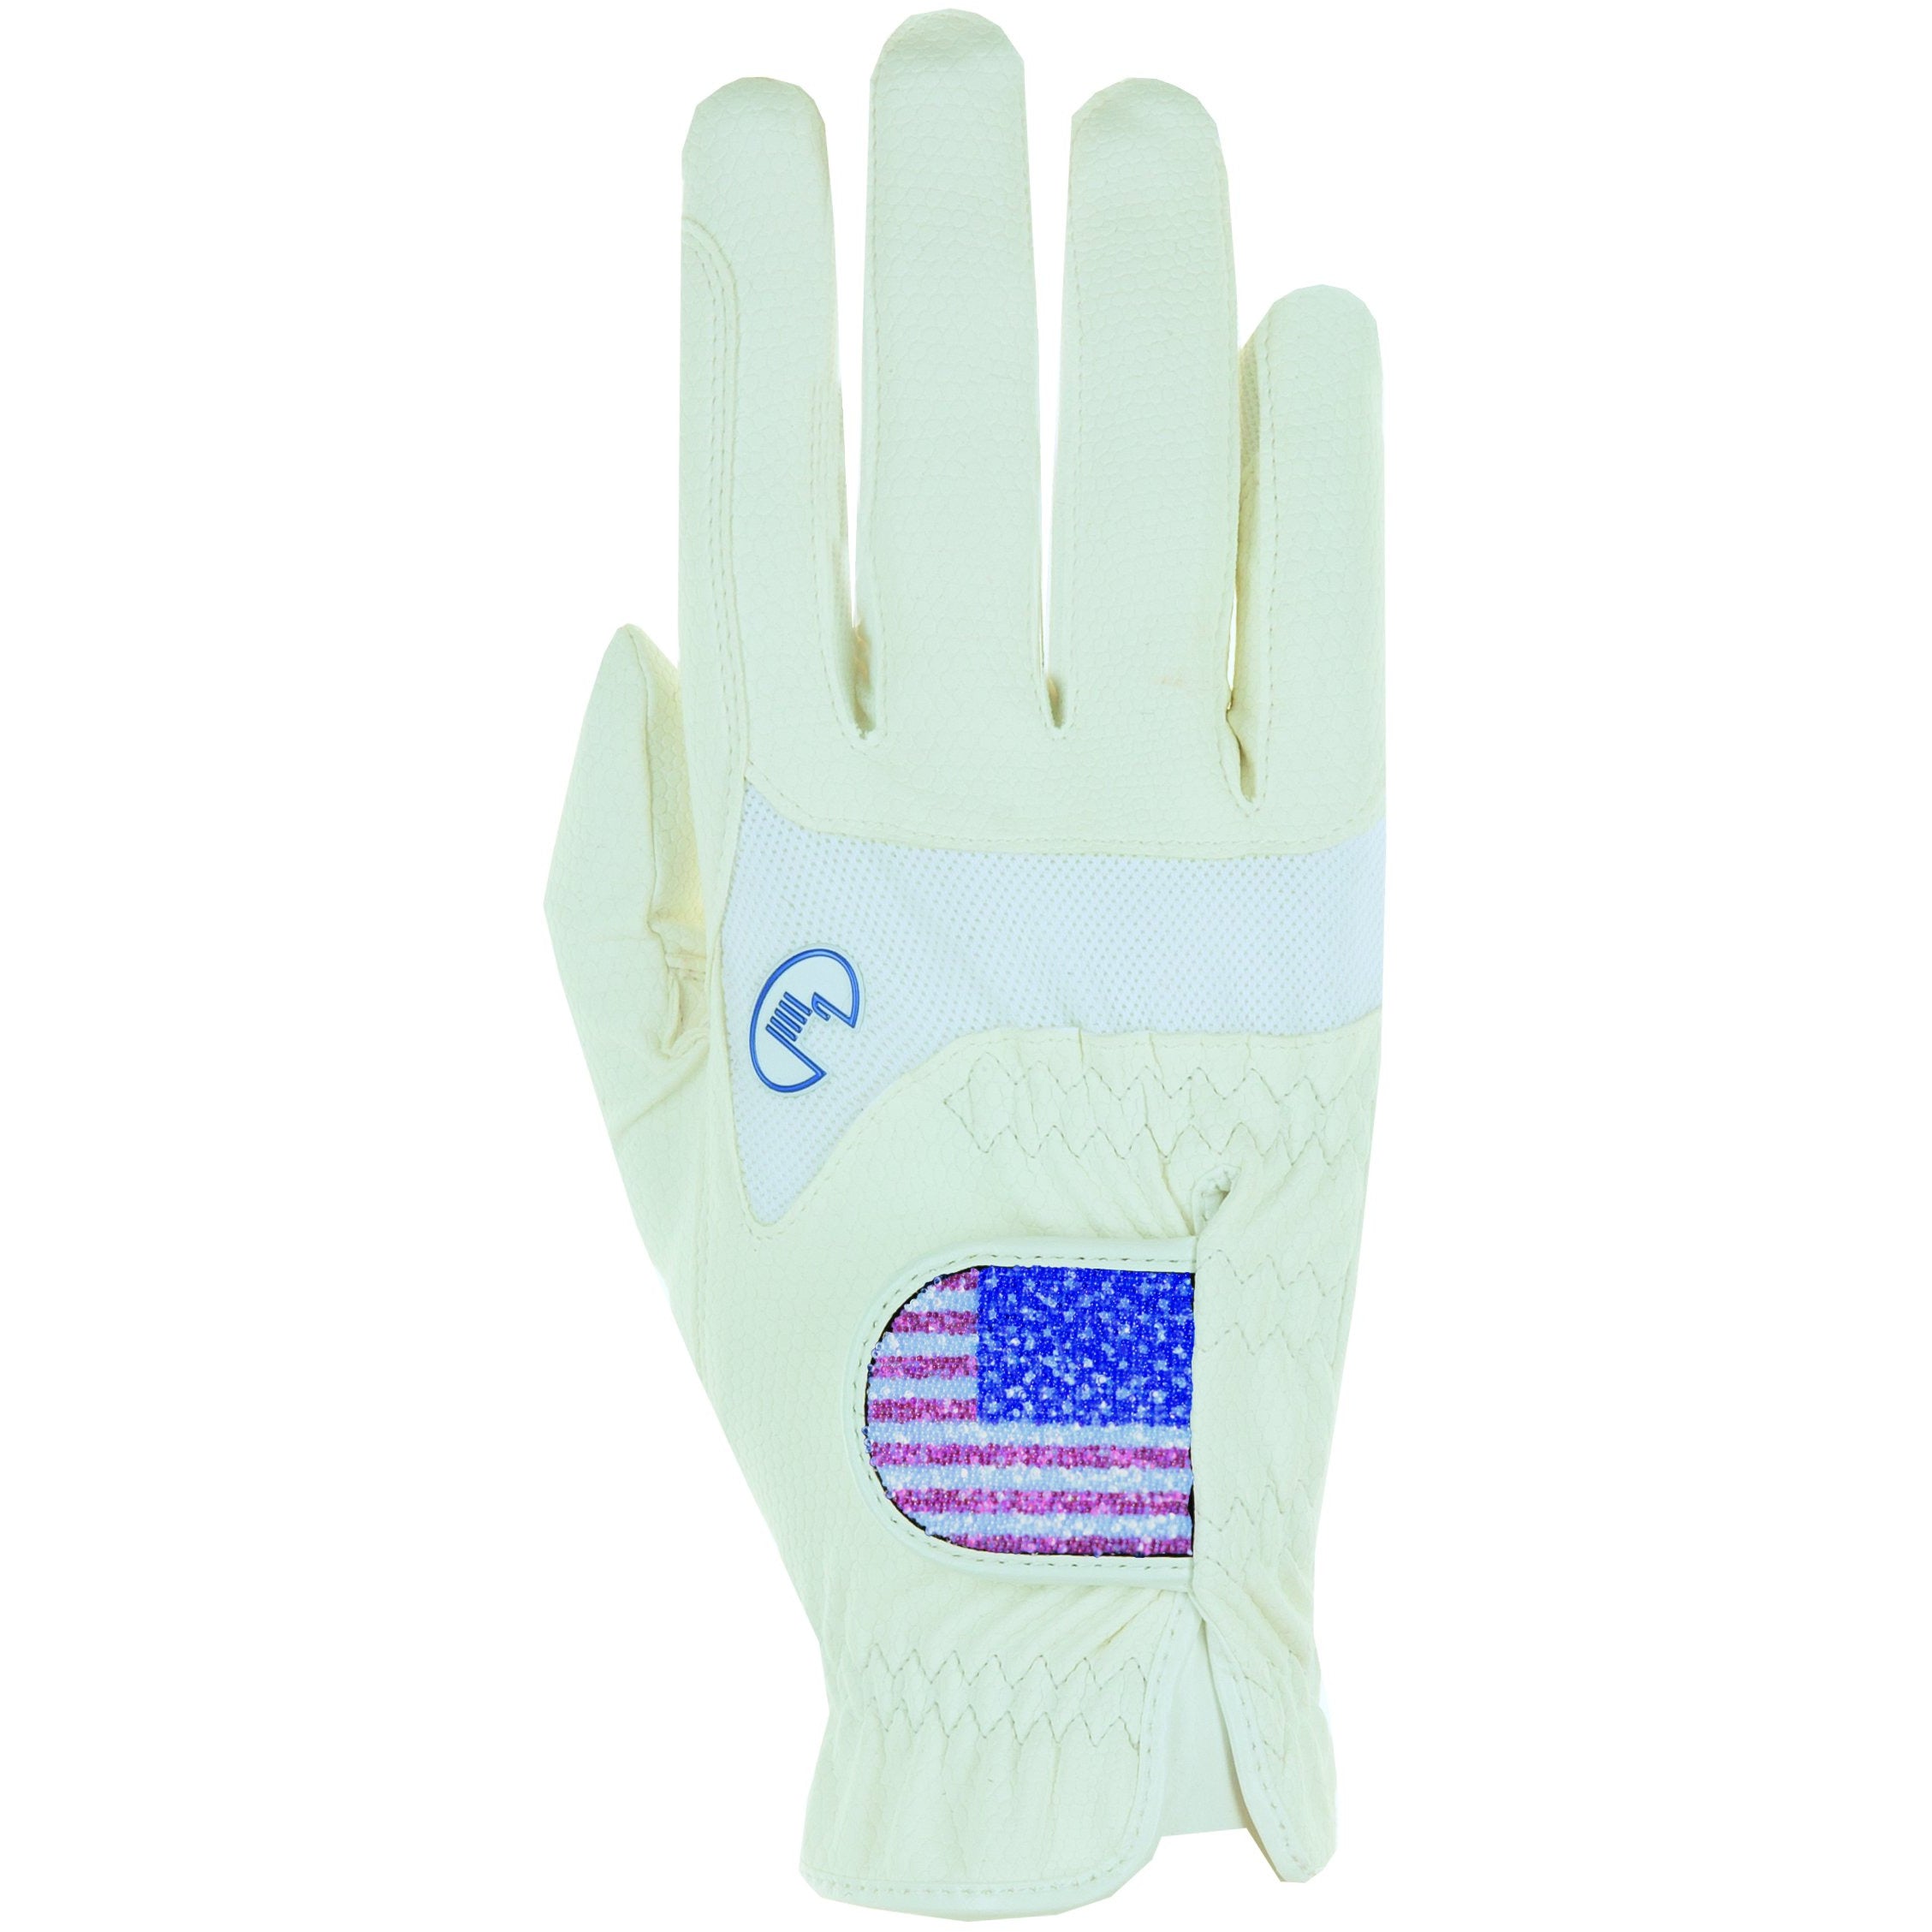 Roeckl Maryland Glove - USA